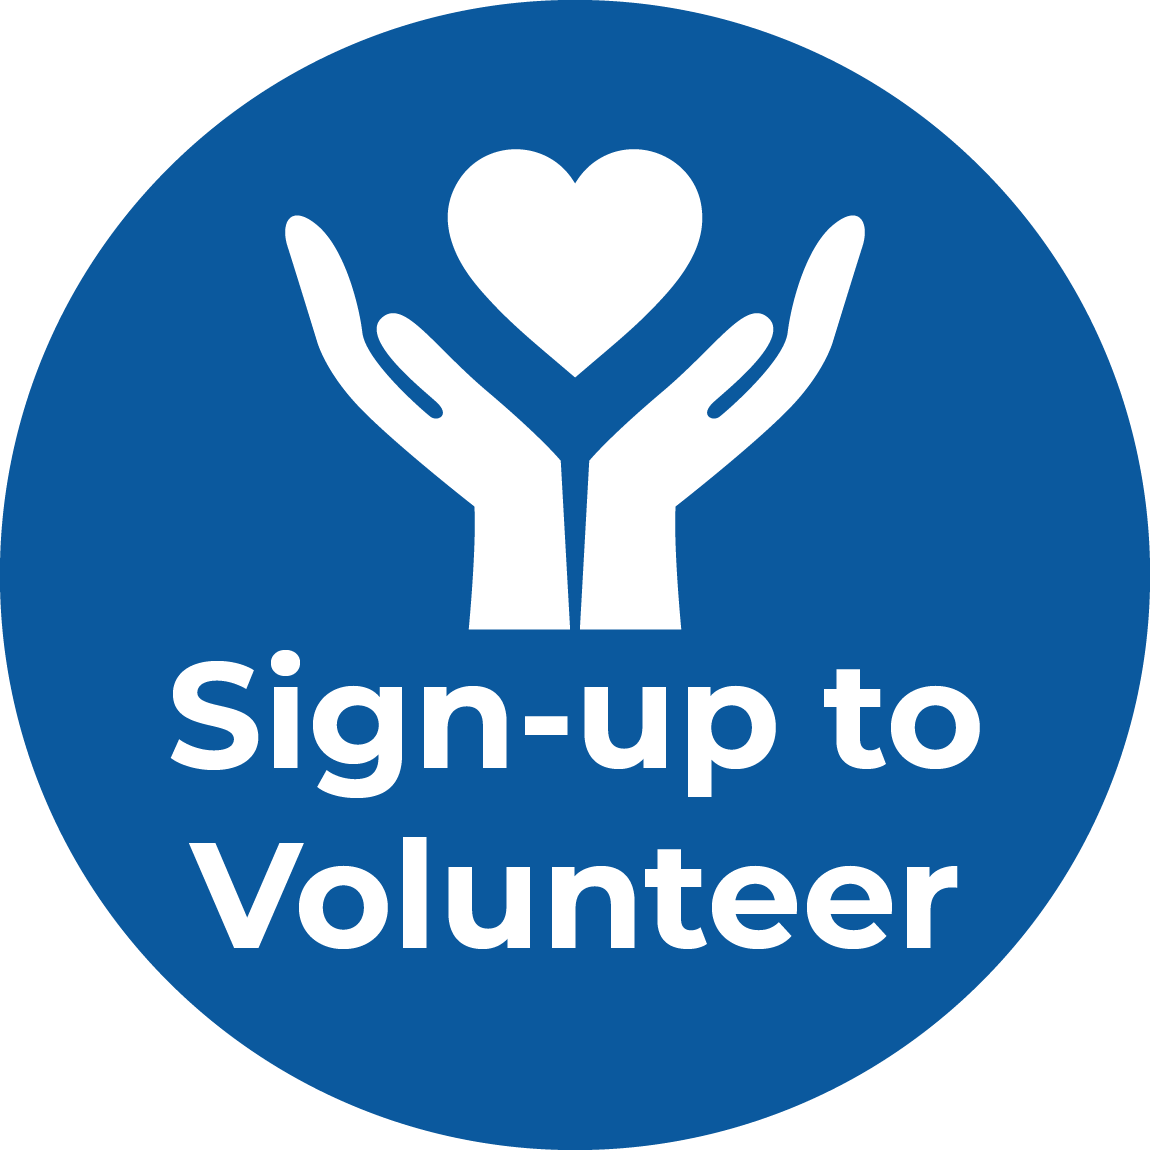 Volunteer Icon